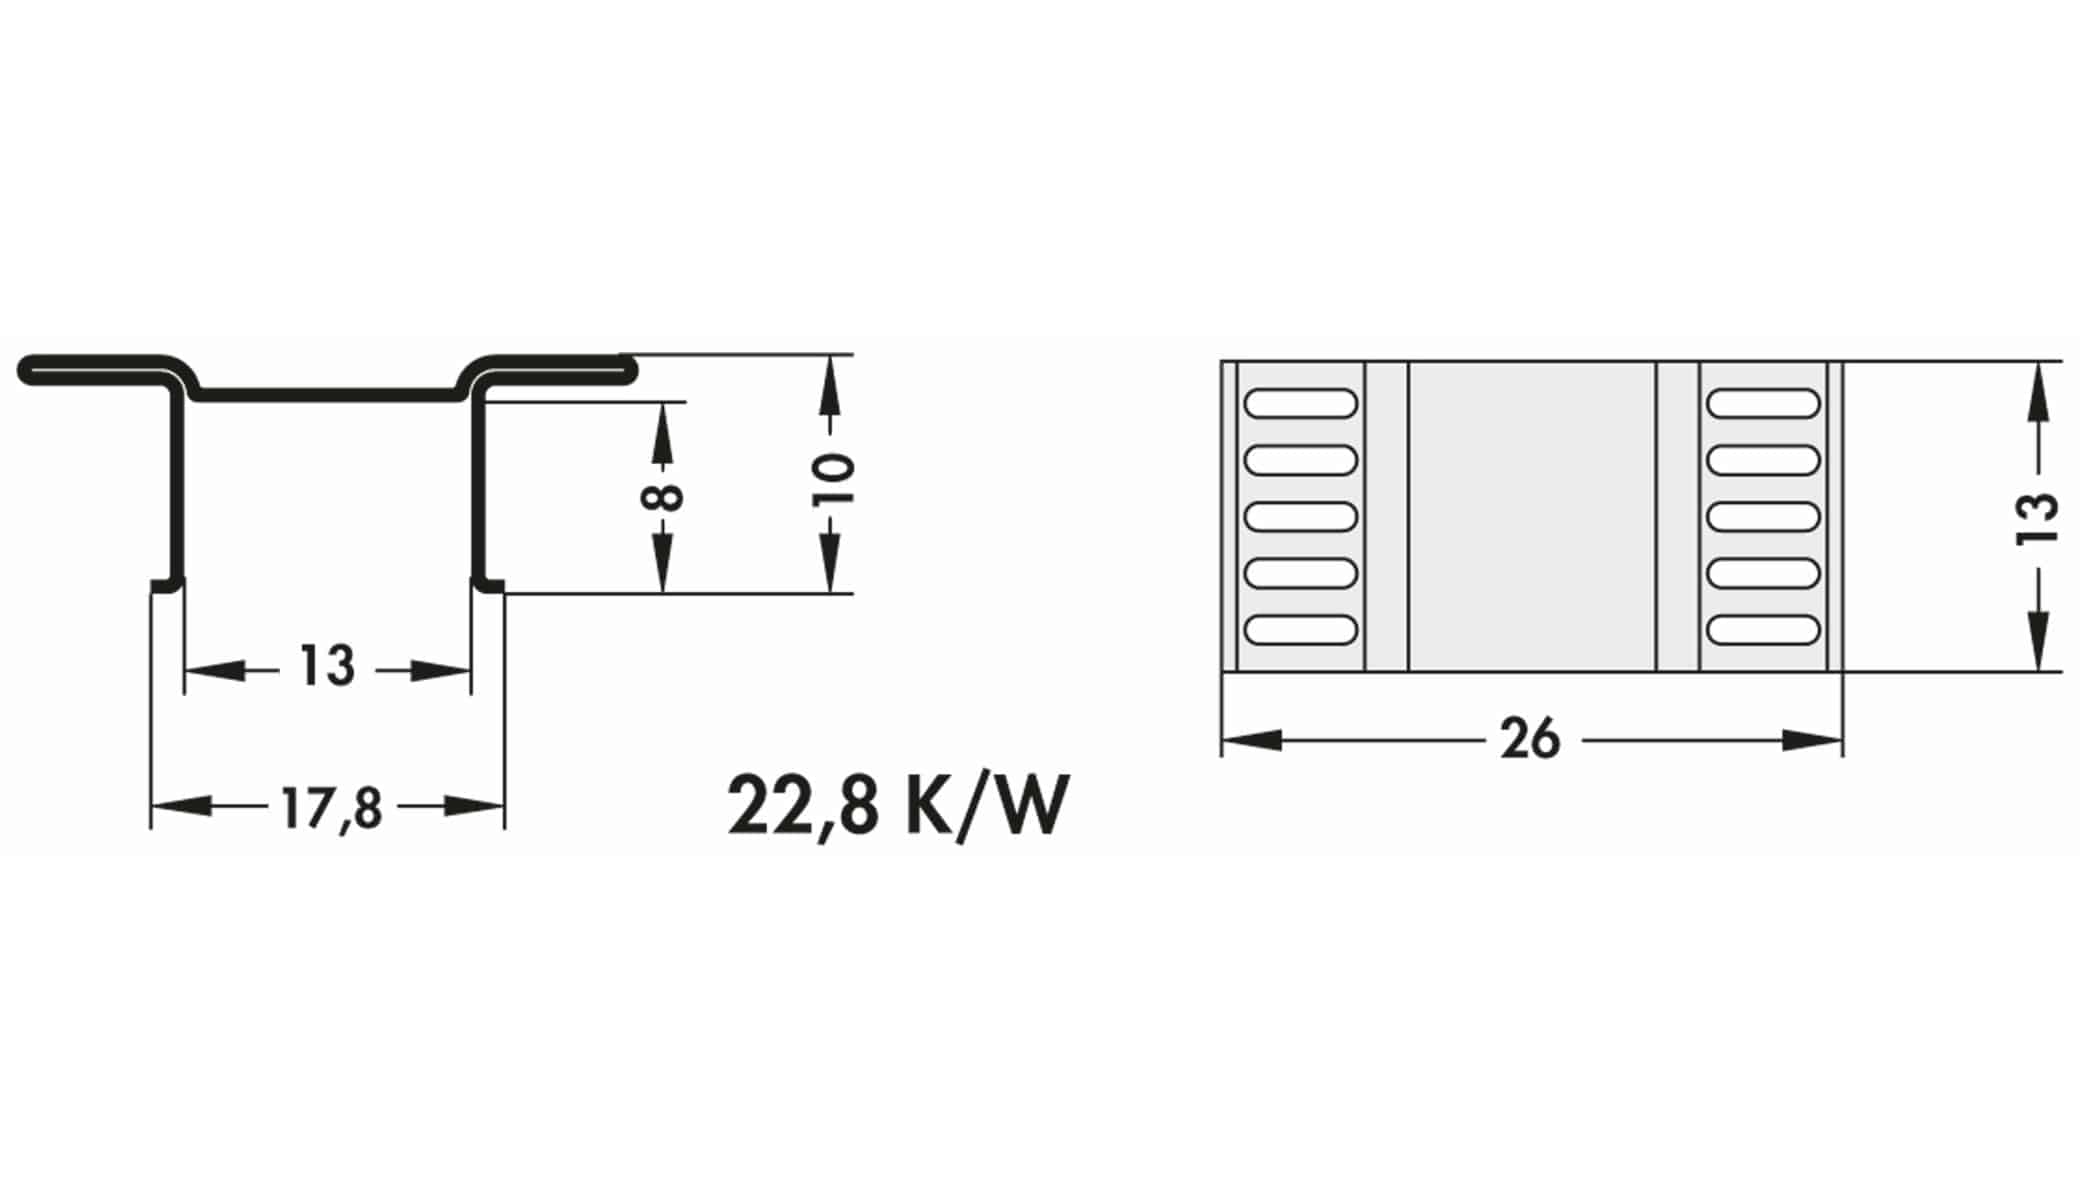 FISCHER ELEKTRONIK Kühlkörper, FK 244 13 D2 PAK, SMD Kühlkörper, blank, Aluminium